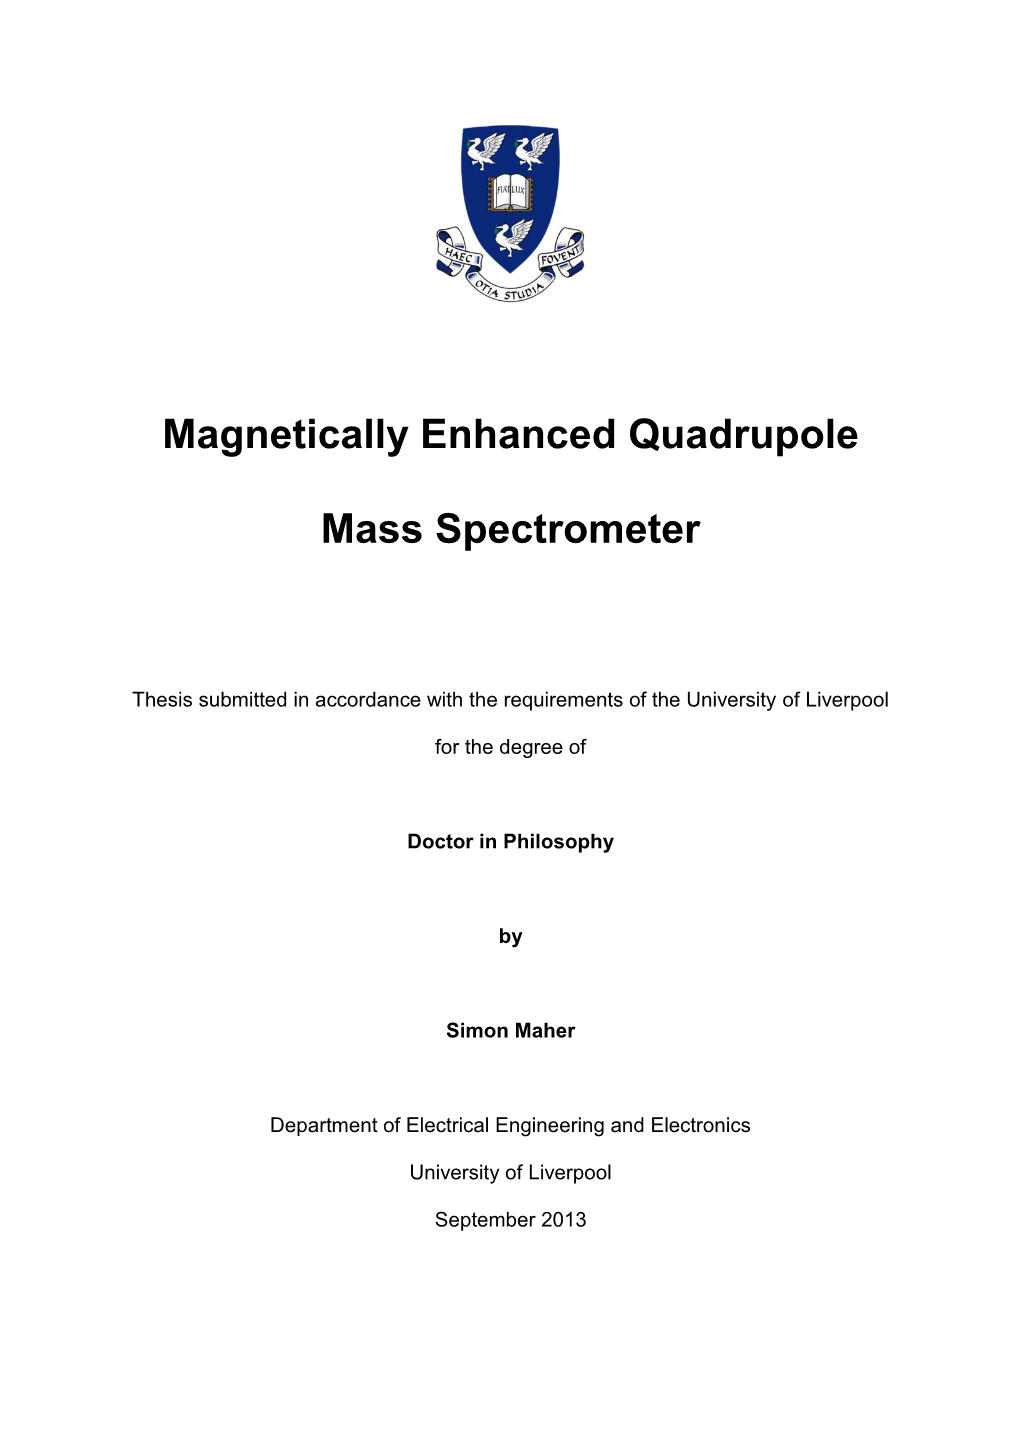 Magnetically Enhanced Quadrupole Mass Spectrometer